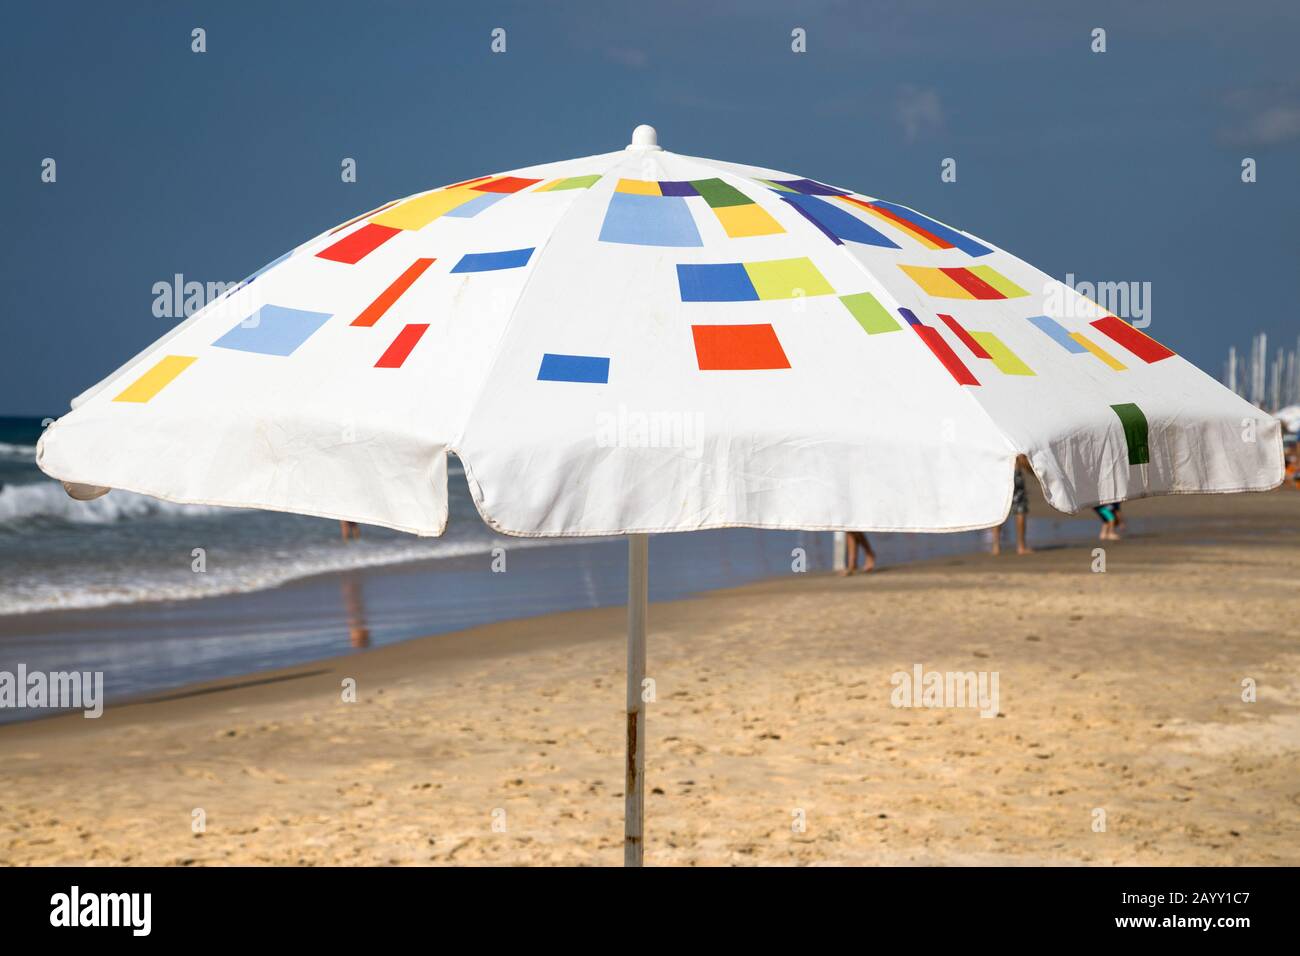 Tel aviv israel beach umbrella hi-res stock photography and images - Alamy